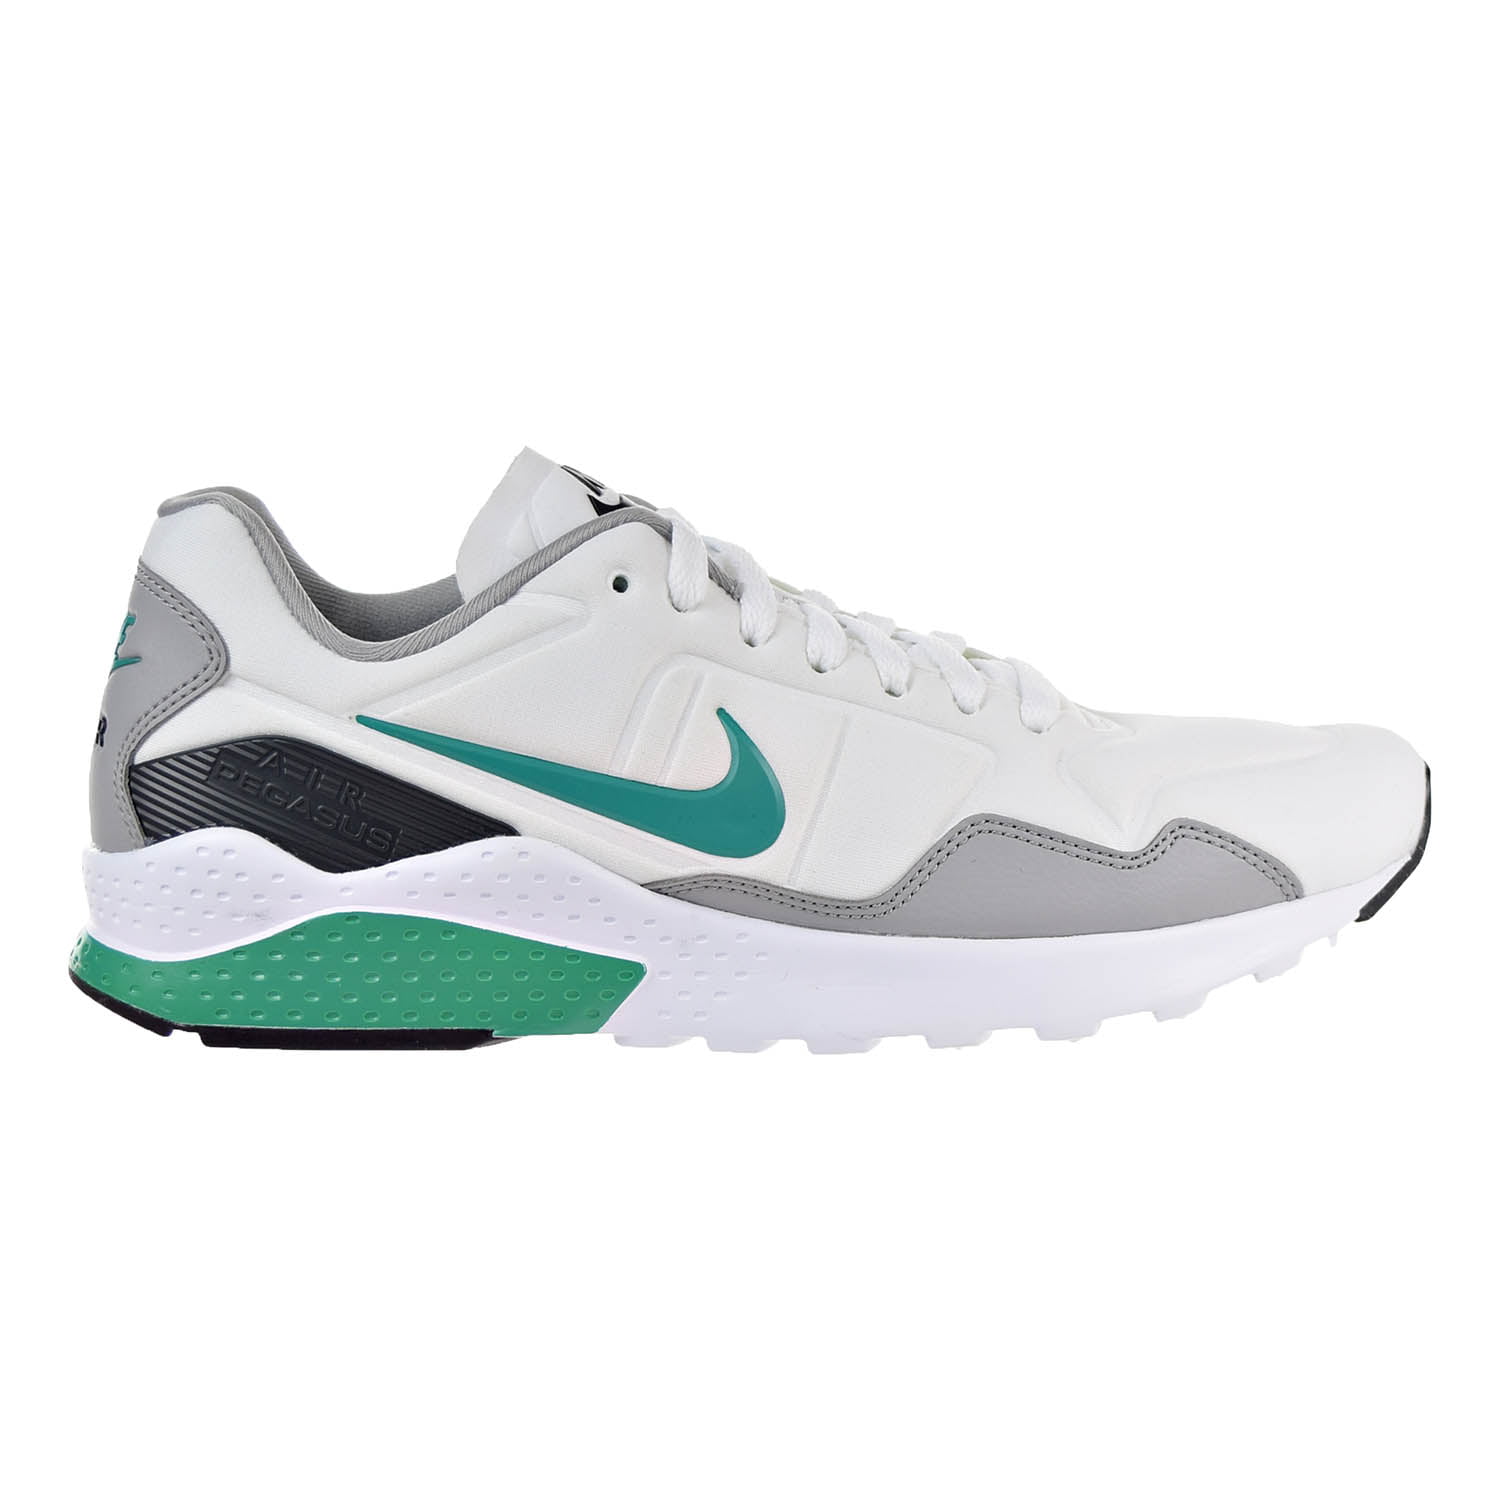 Rechazo Exceder Consejos Nike Air Zoom Pegasus 92 Men's Shoes White/Stadium Green 844652-102 (8.5  D(M) US) - Walmart.com